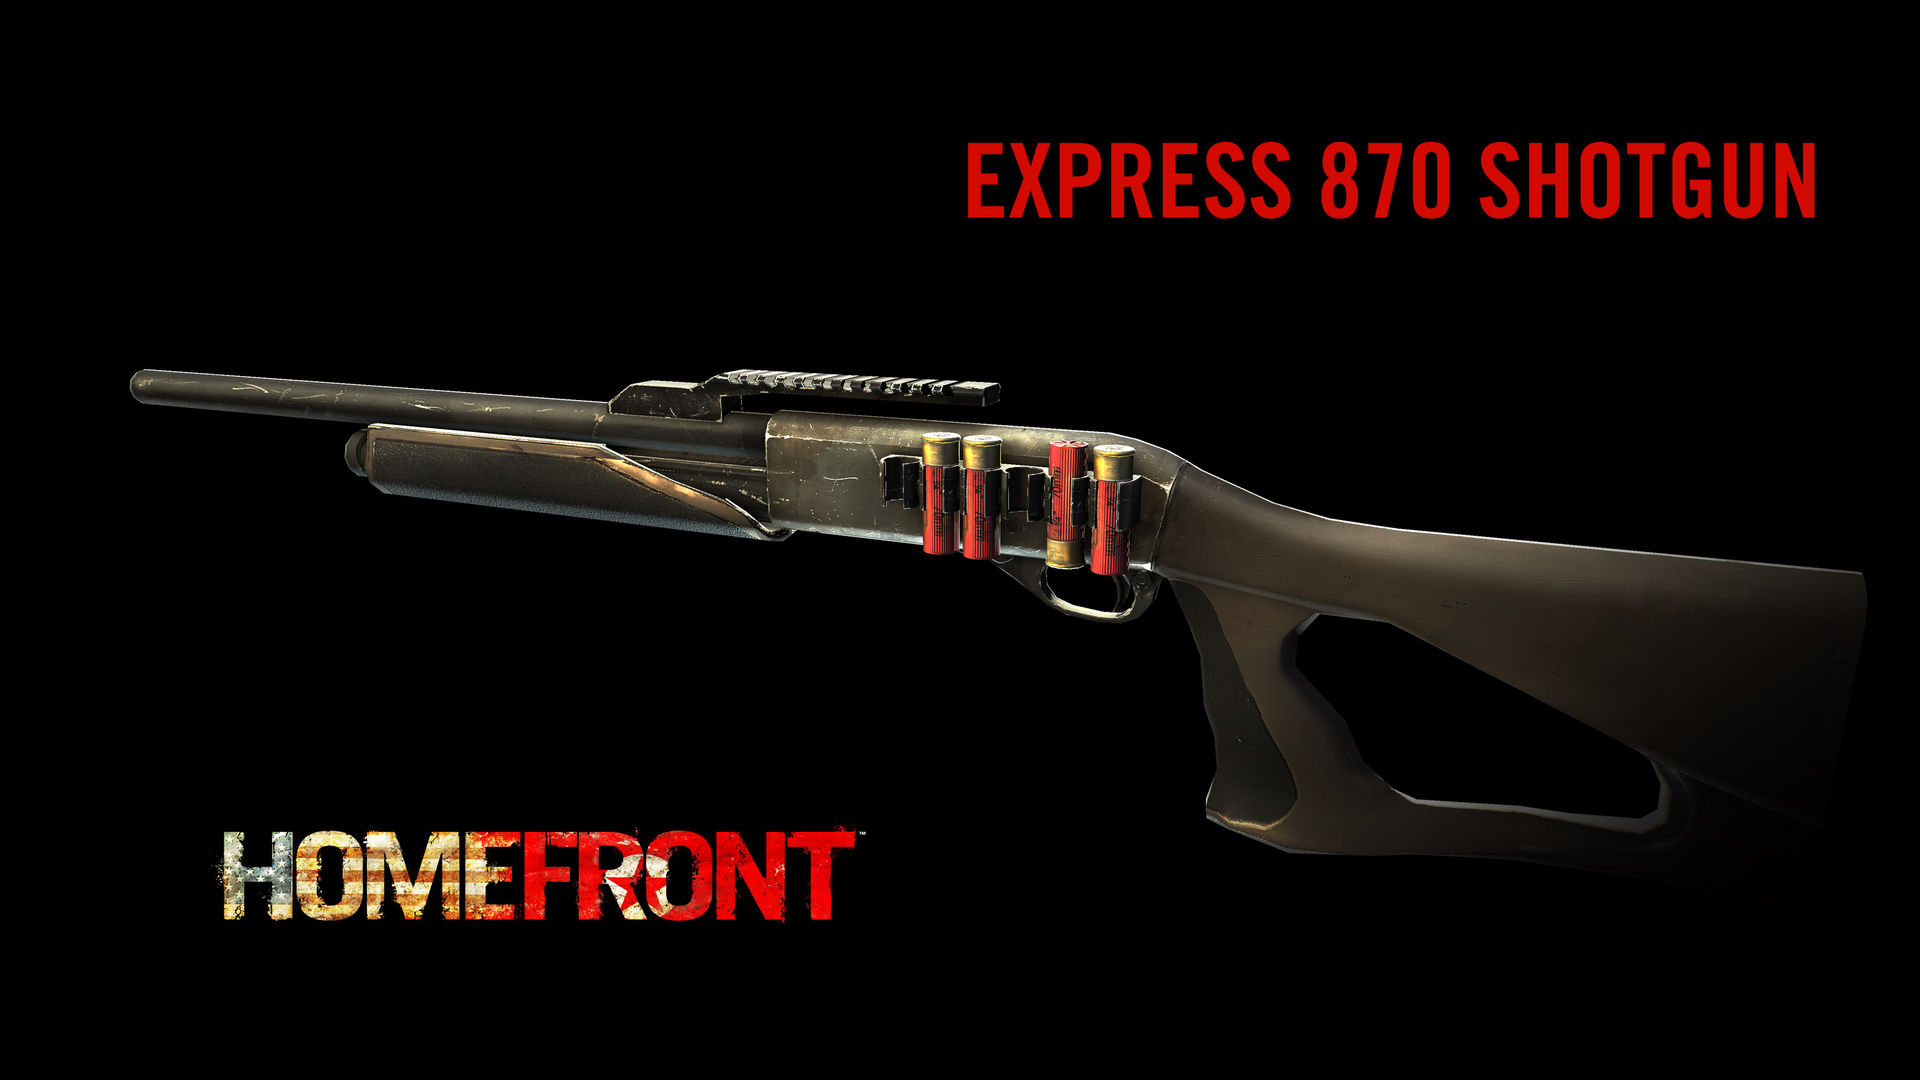 [$ 0.46] Homefront - Express 870 Shotgun DLC Steam CD Key